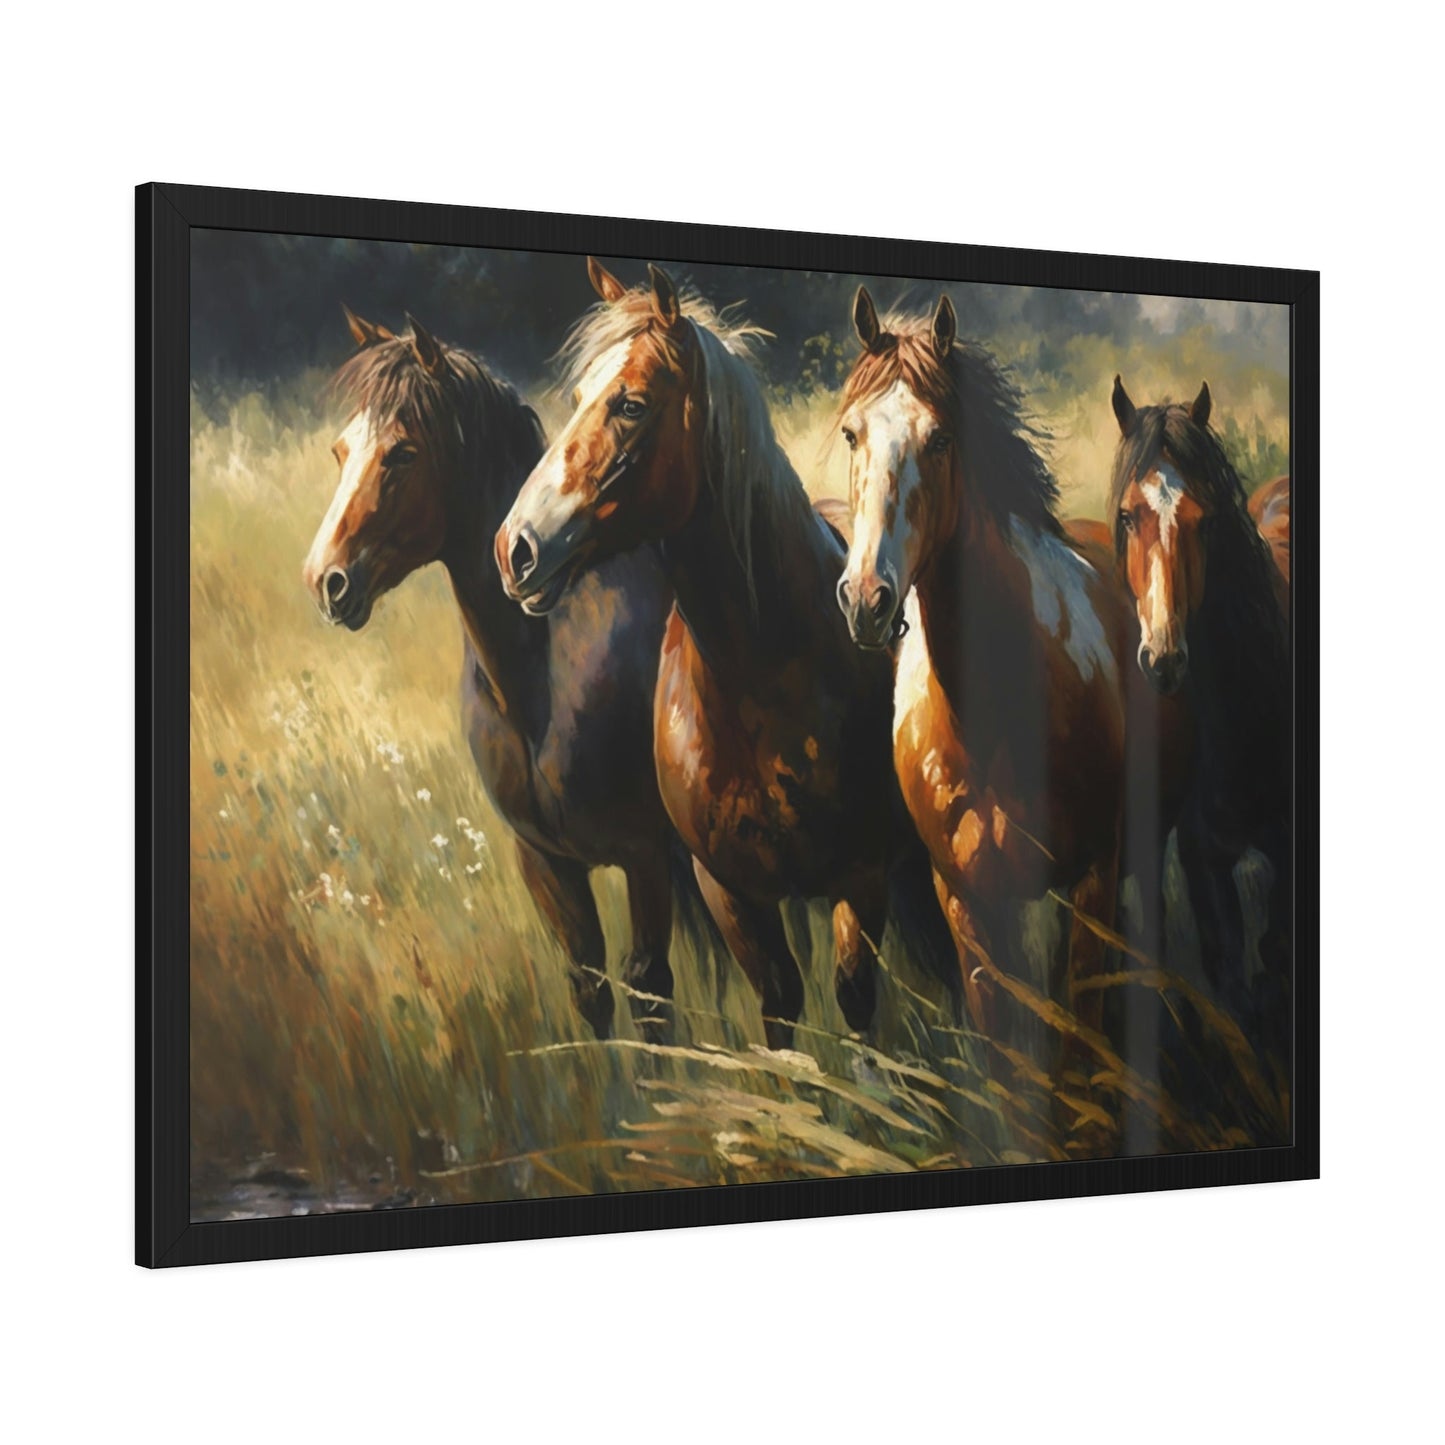 Horses at Dawn: A Canvas Landscape